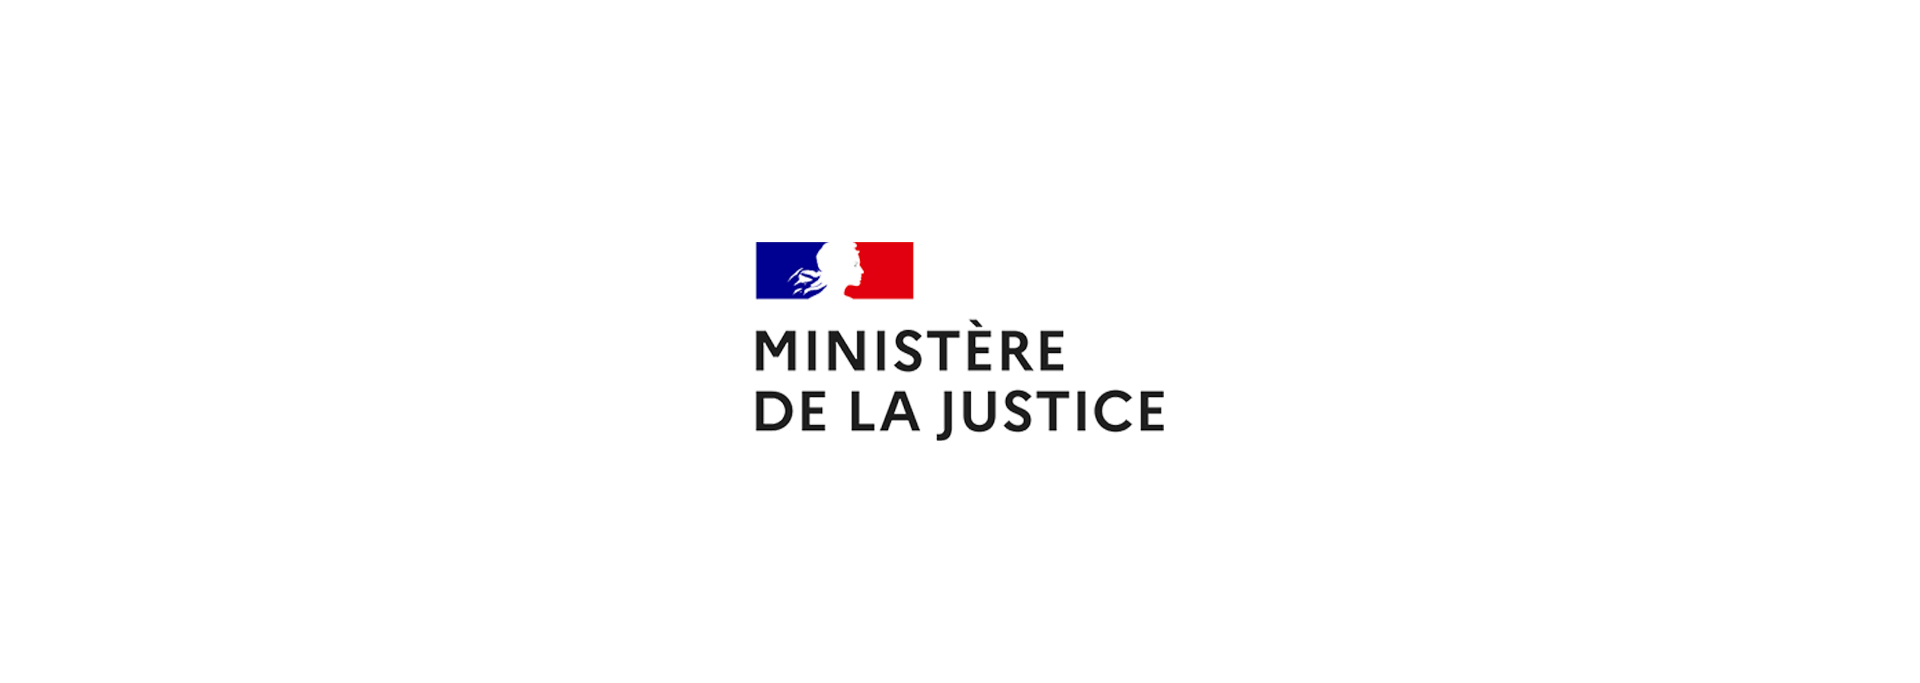 Ministere De La Justice